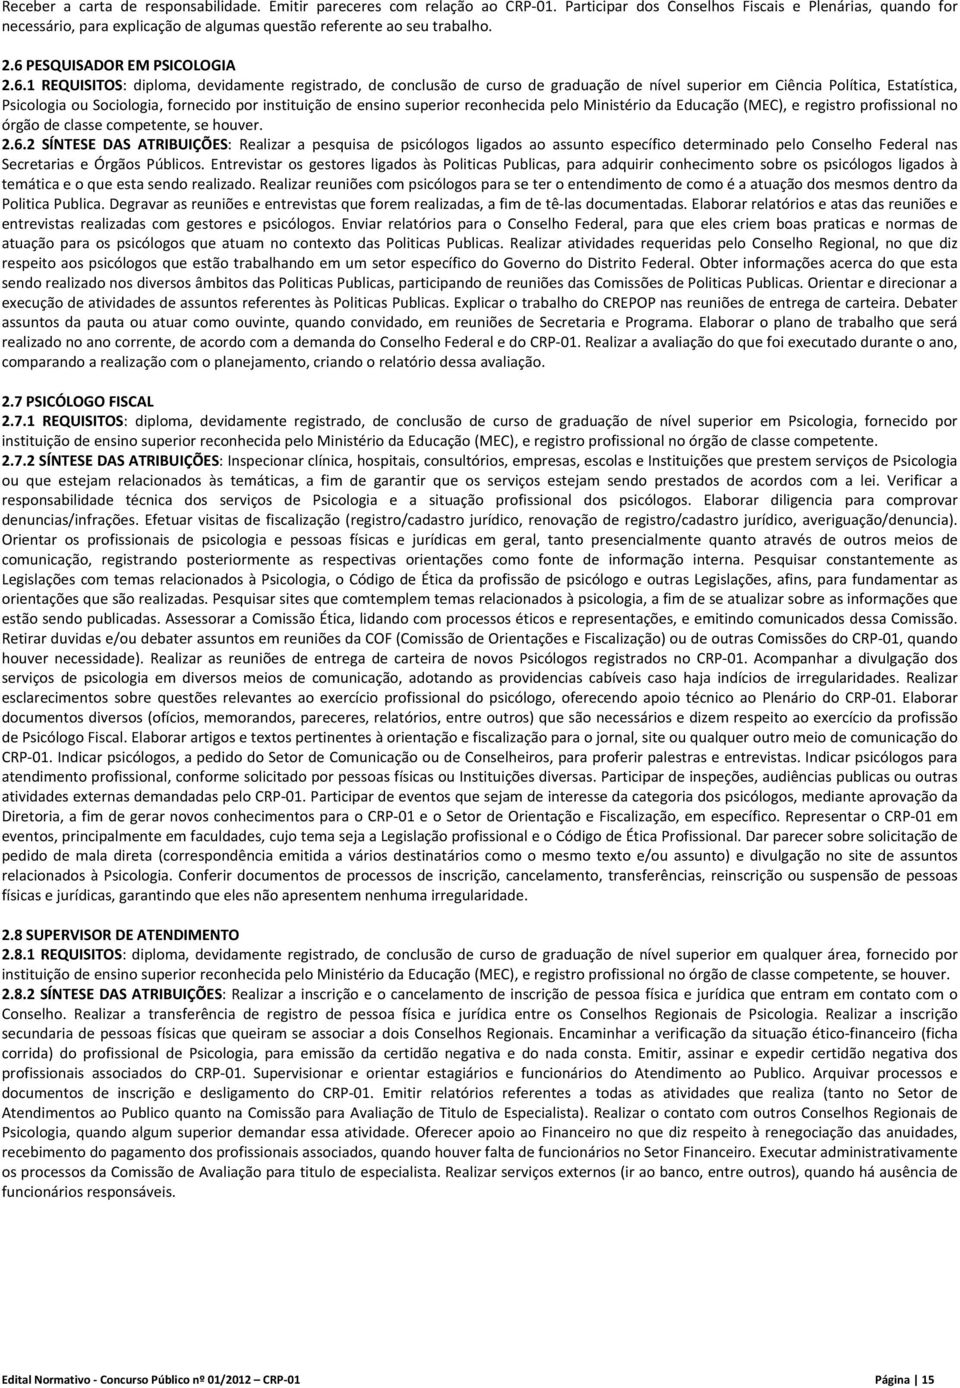 PESQUISADOR EM PSICOLOGIA 2.6.